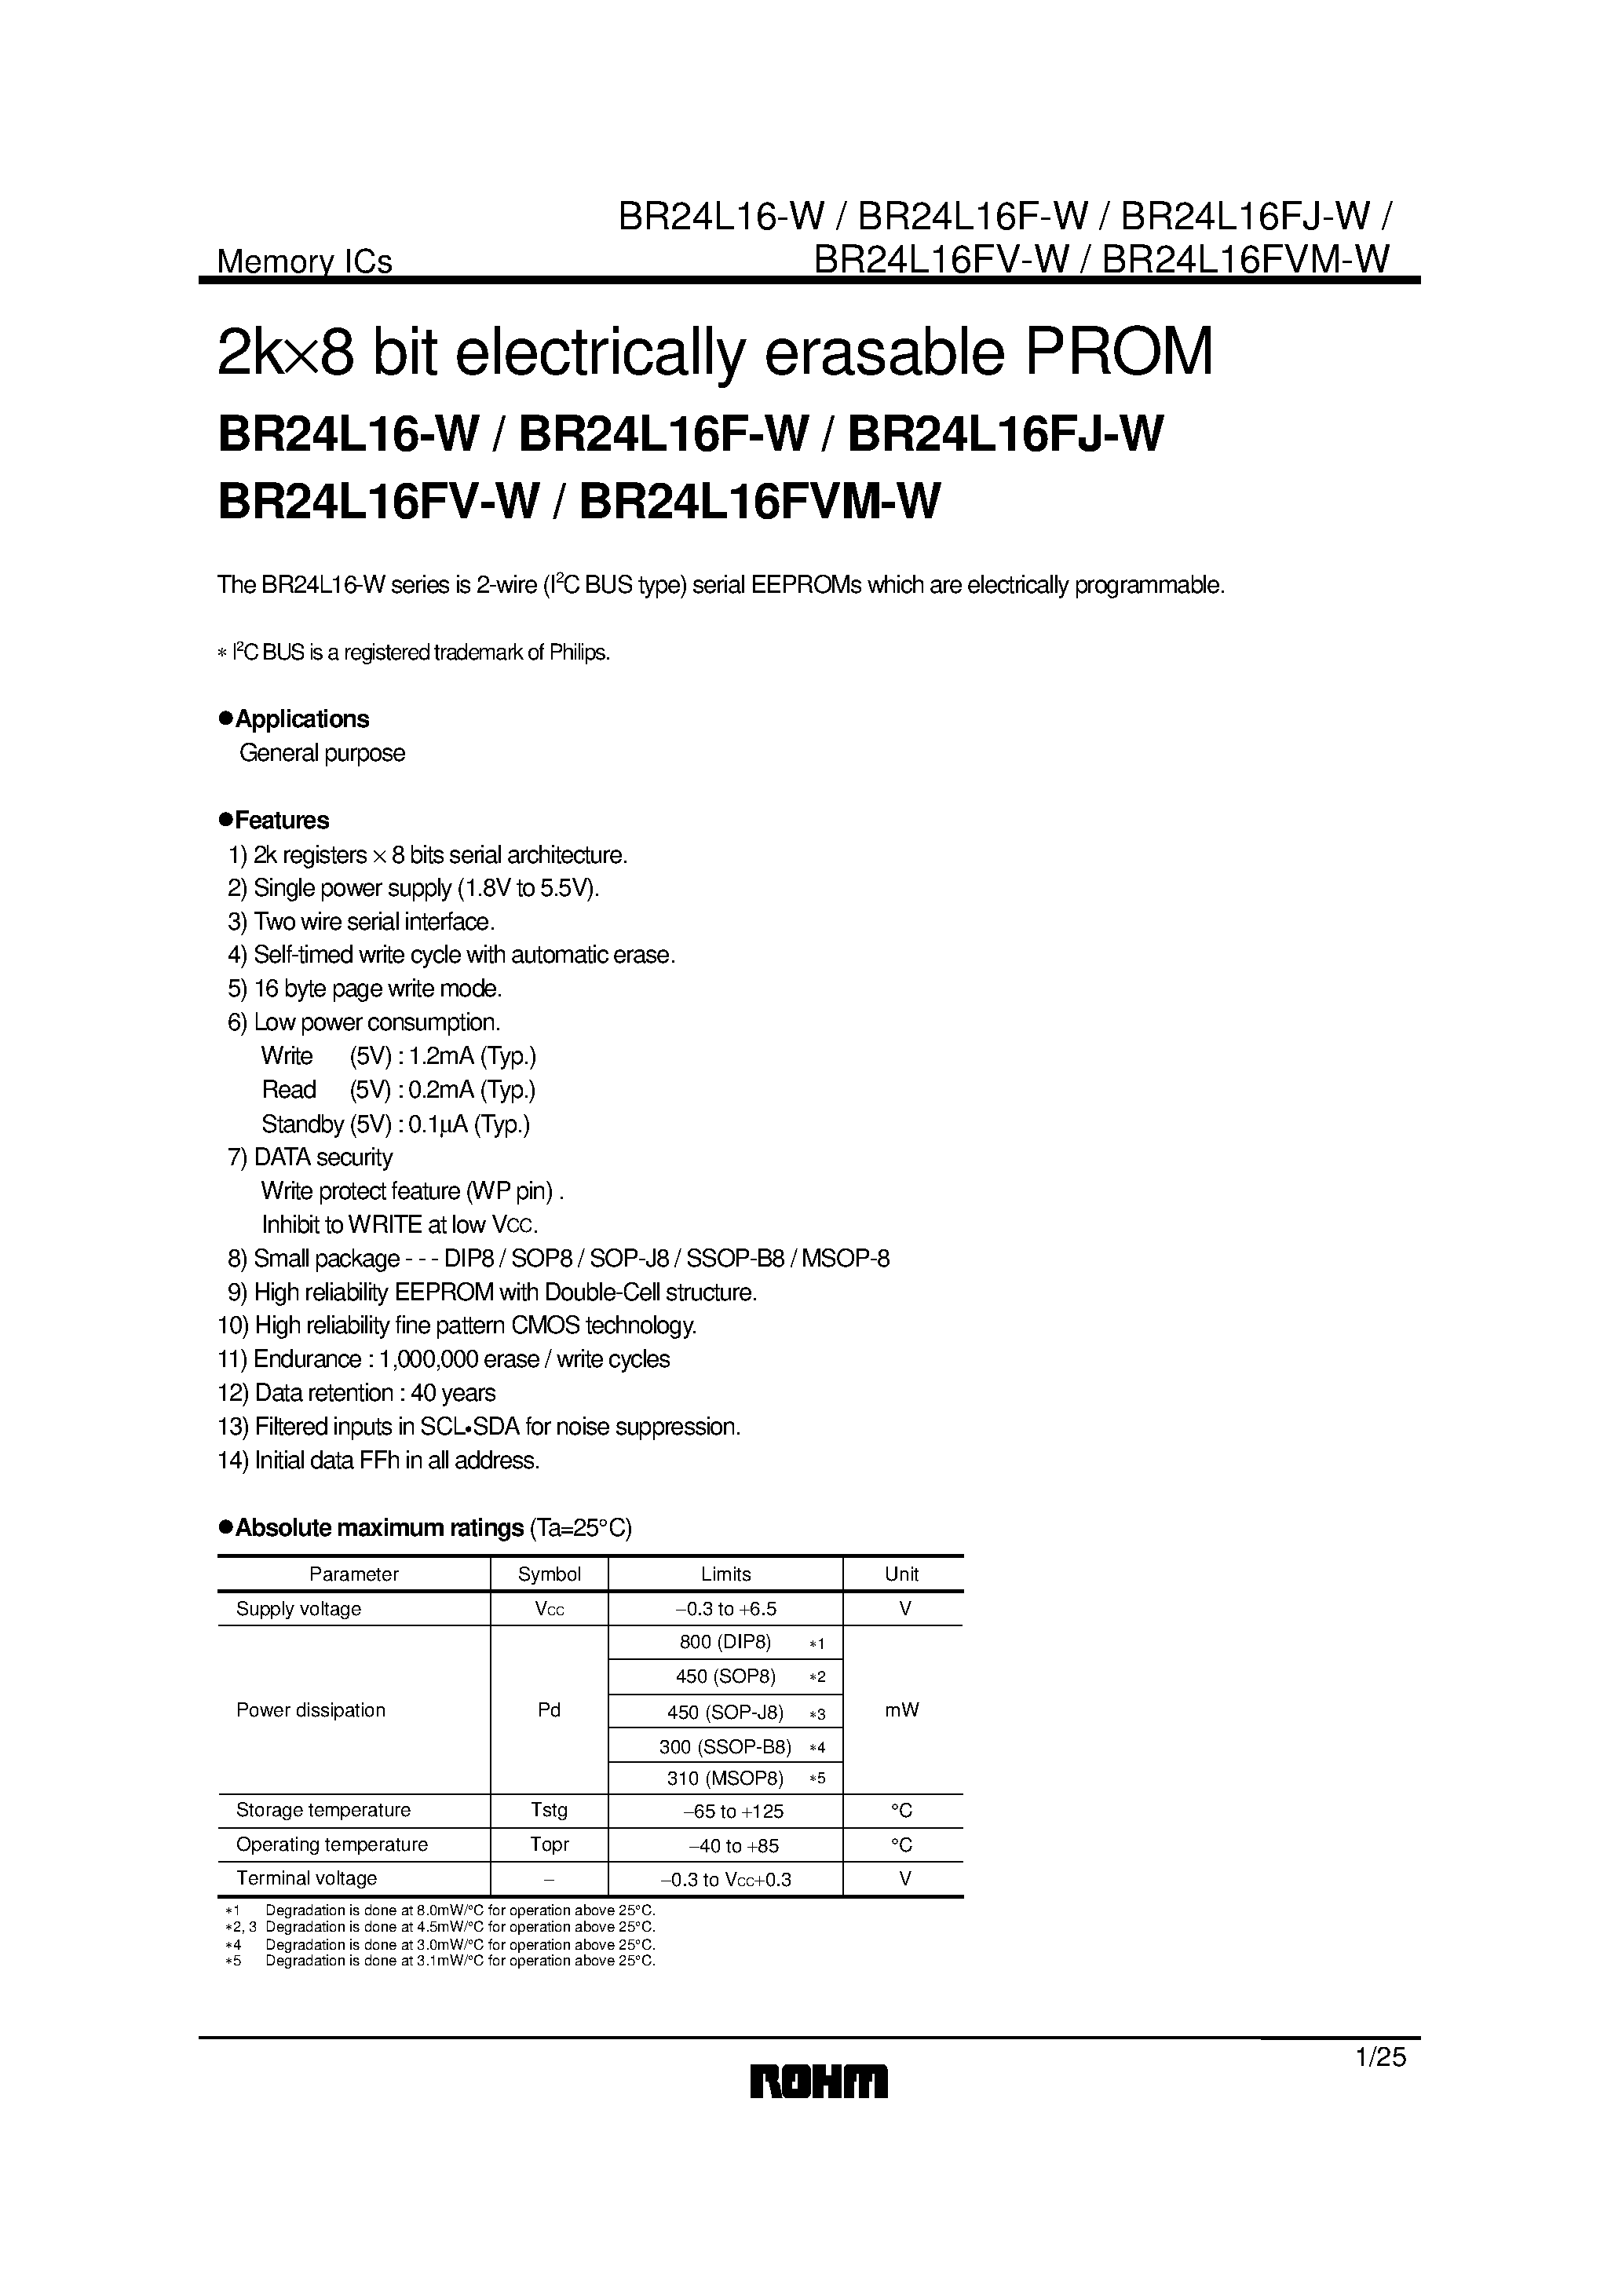 Datasheet BR24L16FJ-W - 2k8 bit electrically erasable PROM page 1